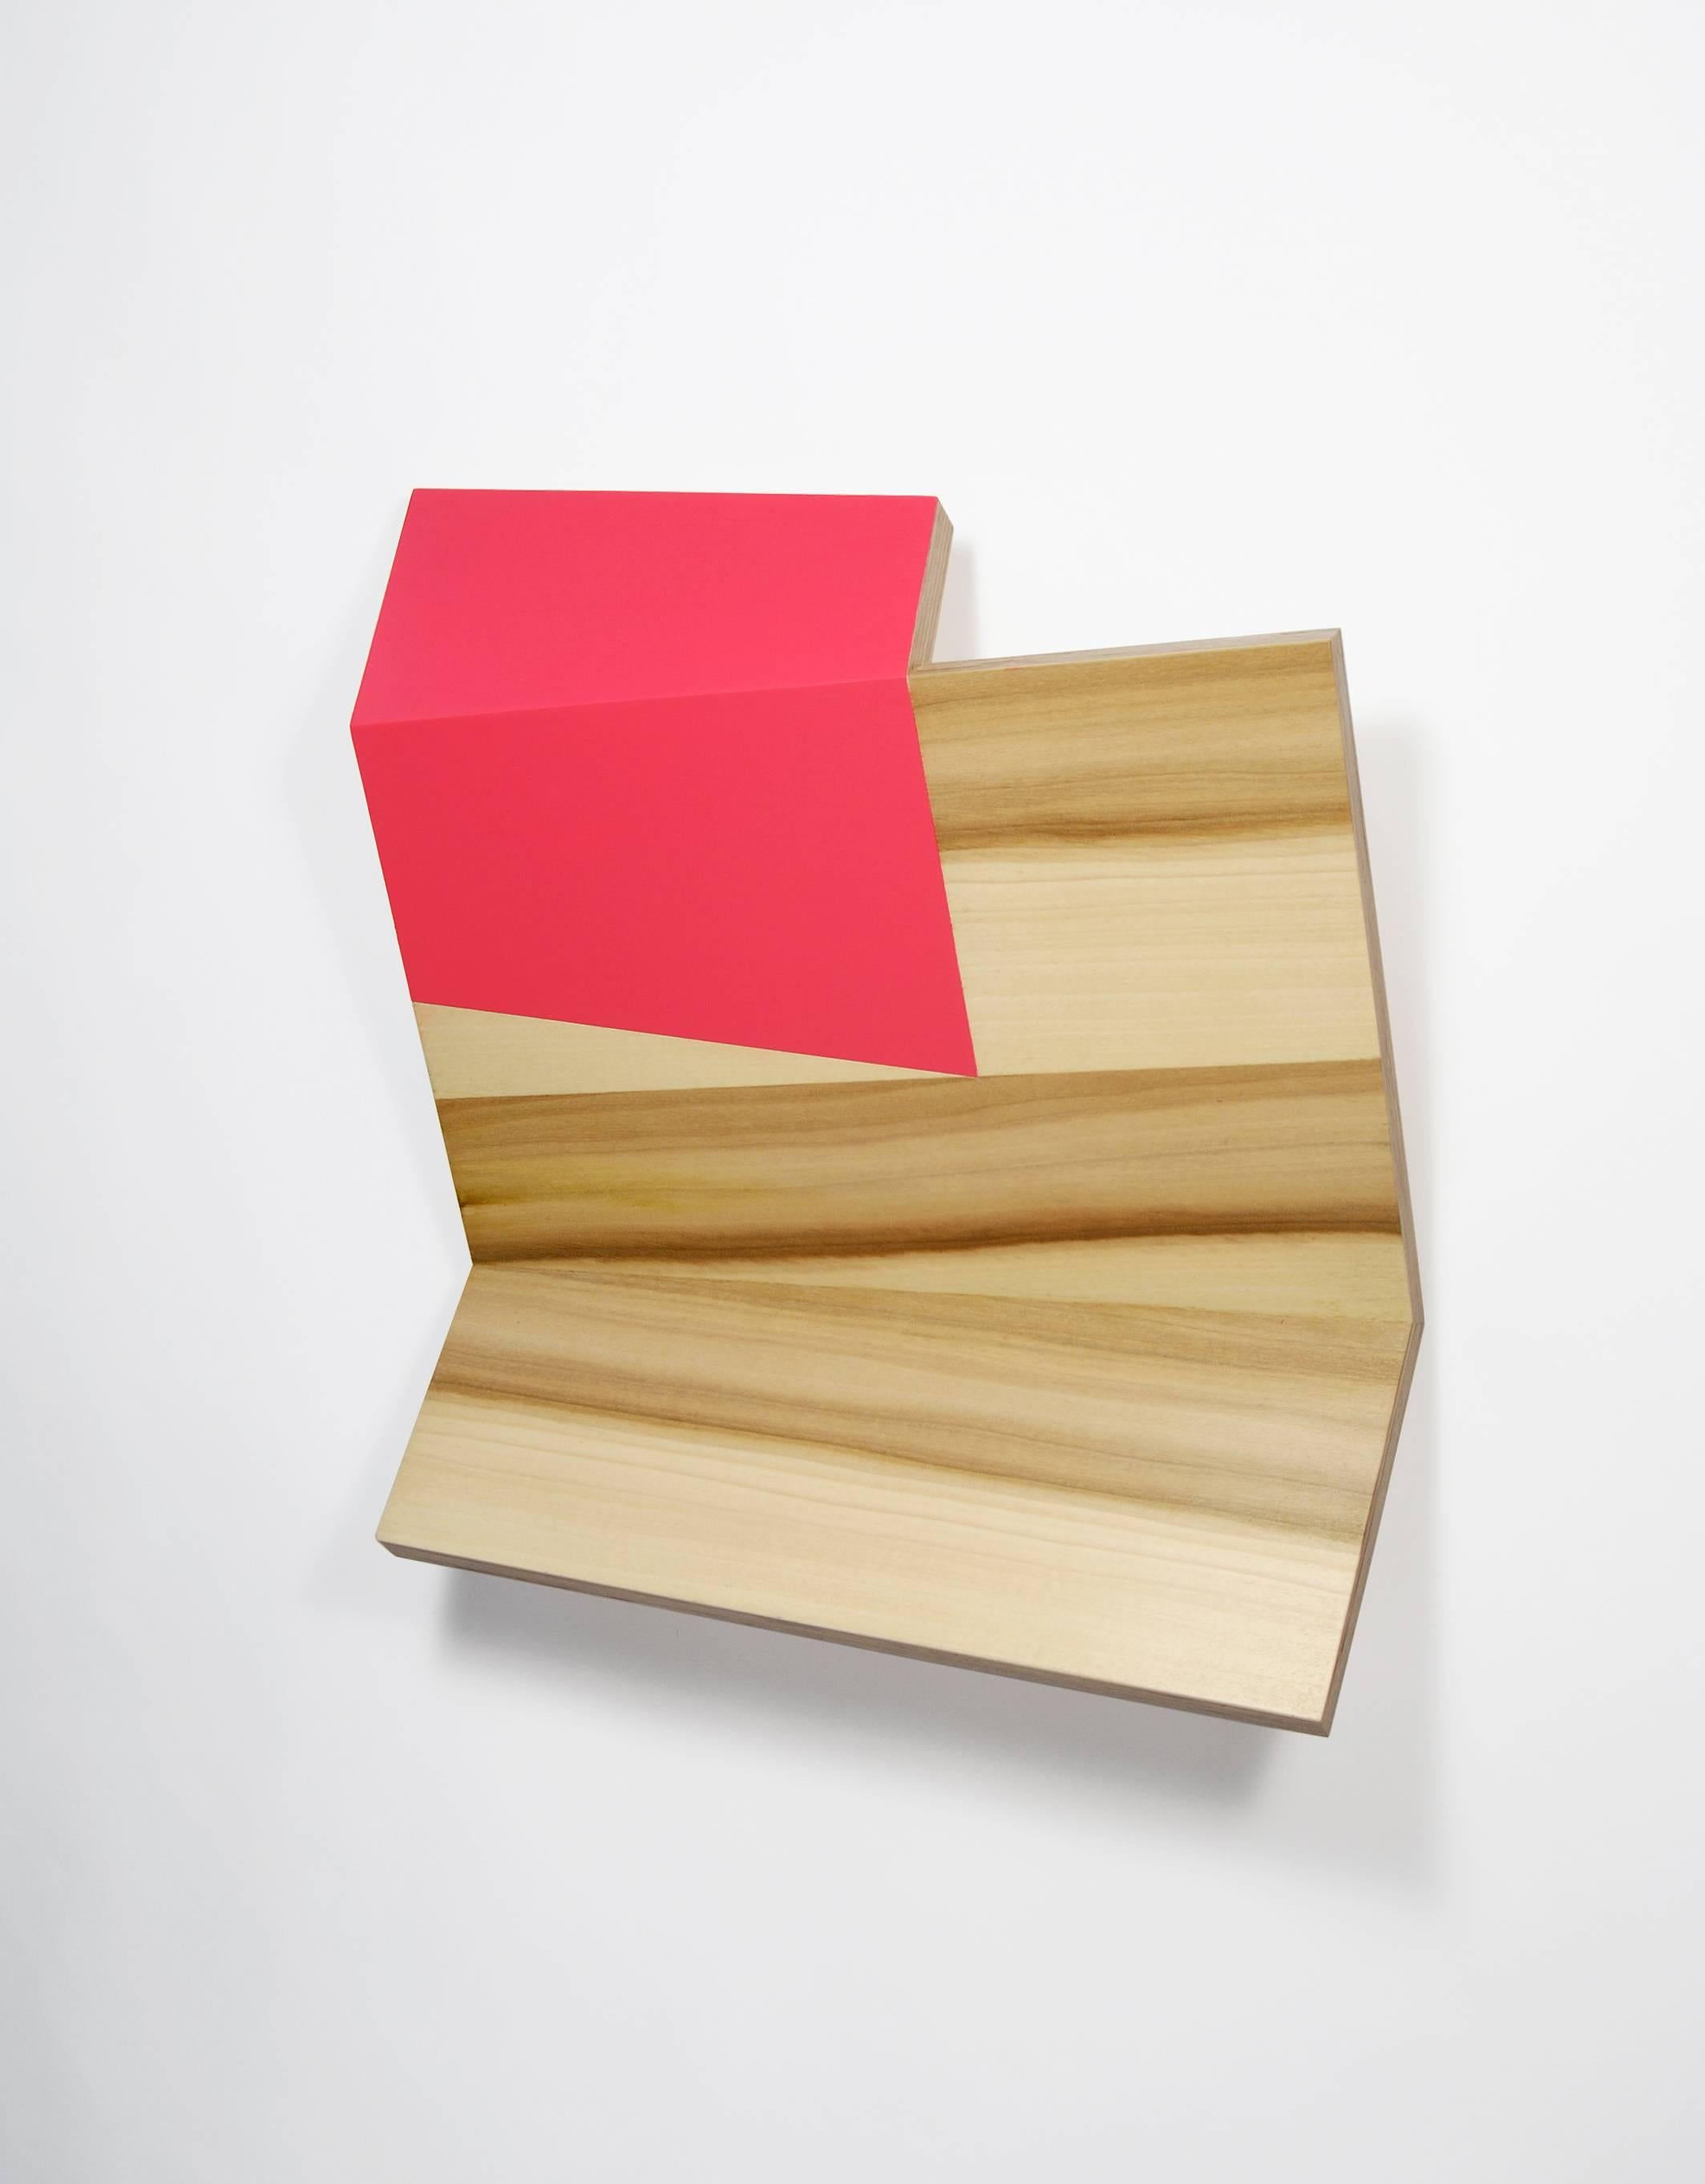 Richard Bottwin, Square 2, 2018, poplar, plywood, acrylic paint 1